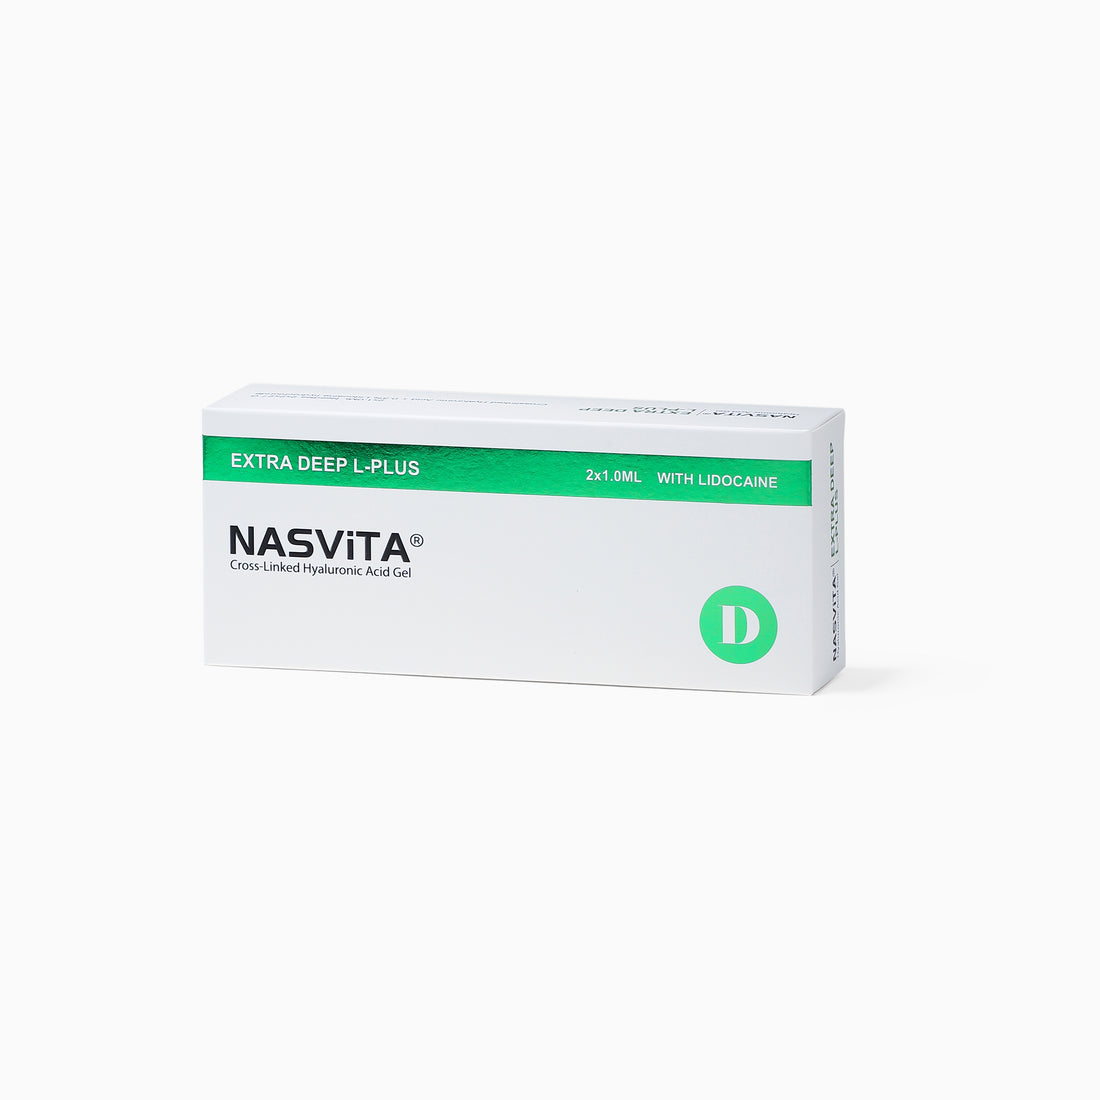 NASViTA EXTRA DEEP L-PLUS Hyaluronic Acid Filler with Lido for Deep Wrinkles 1 ml * 2 Syringes